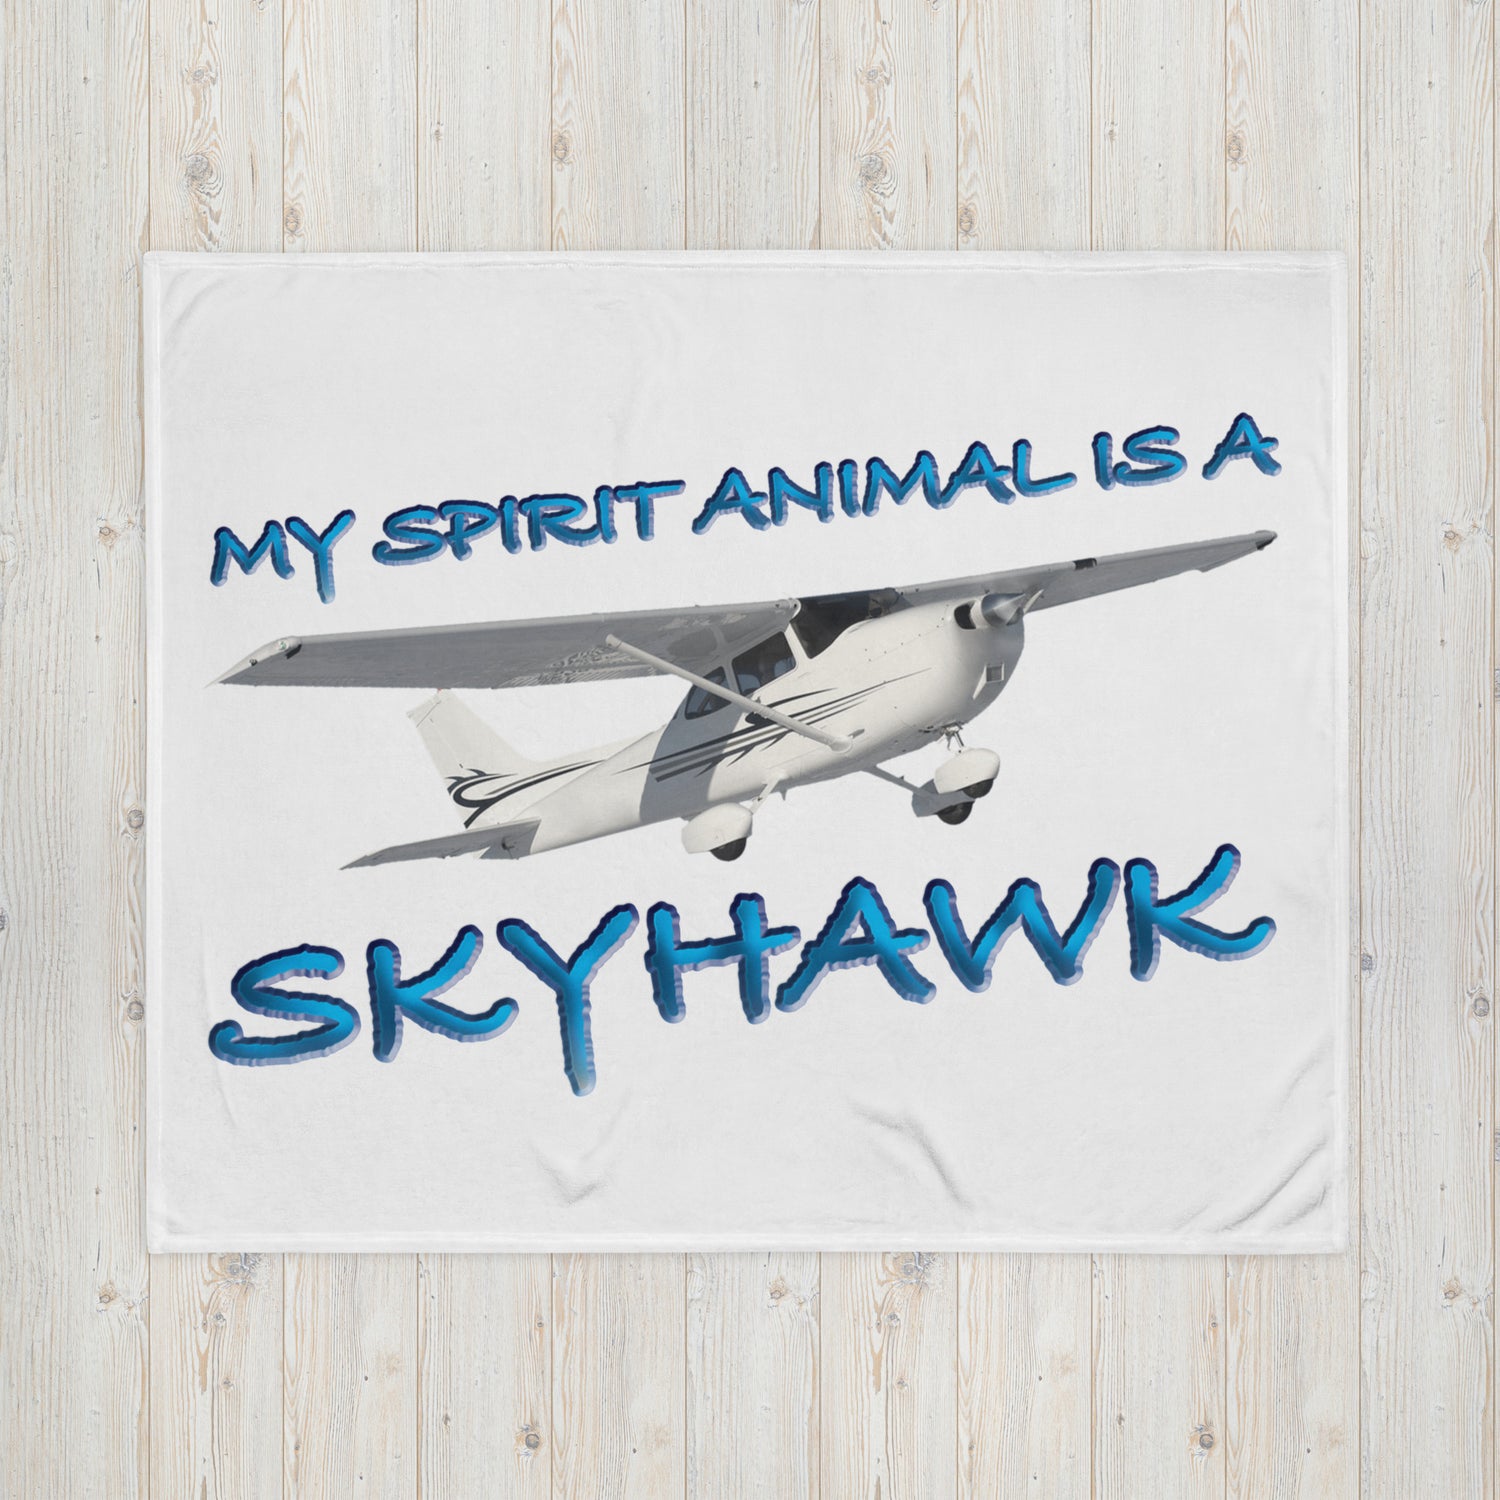 My Spirit Animal is a Skyhawk - Throw Blanket